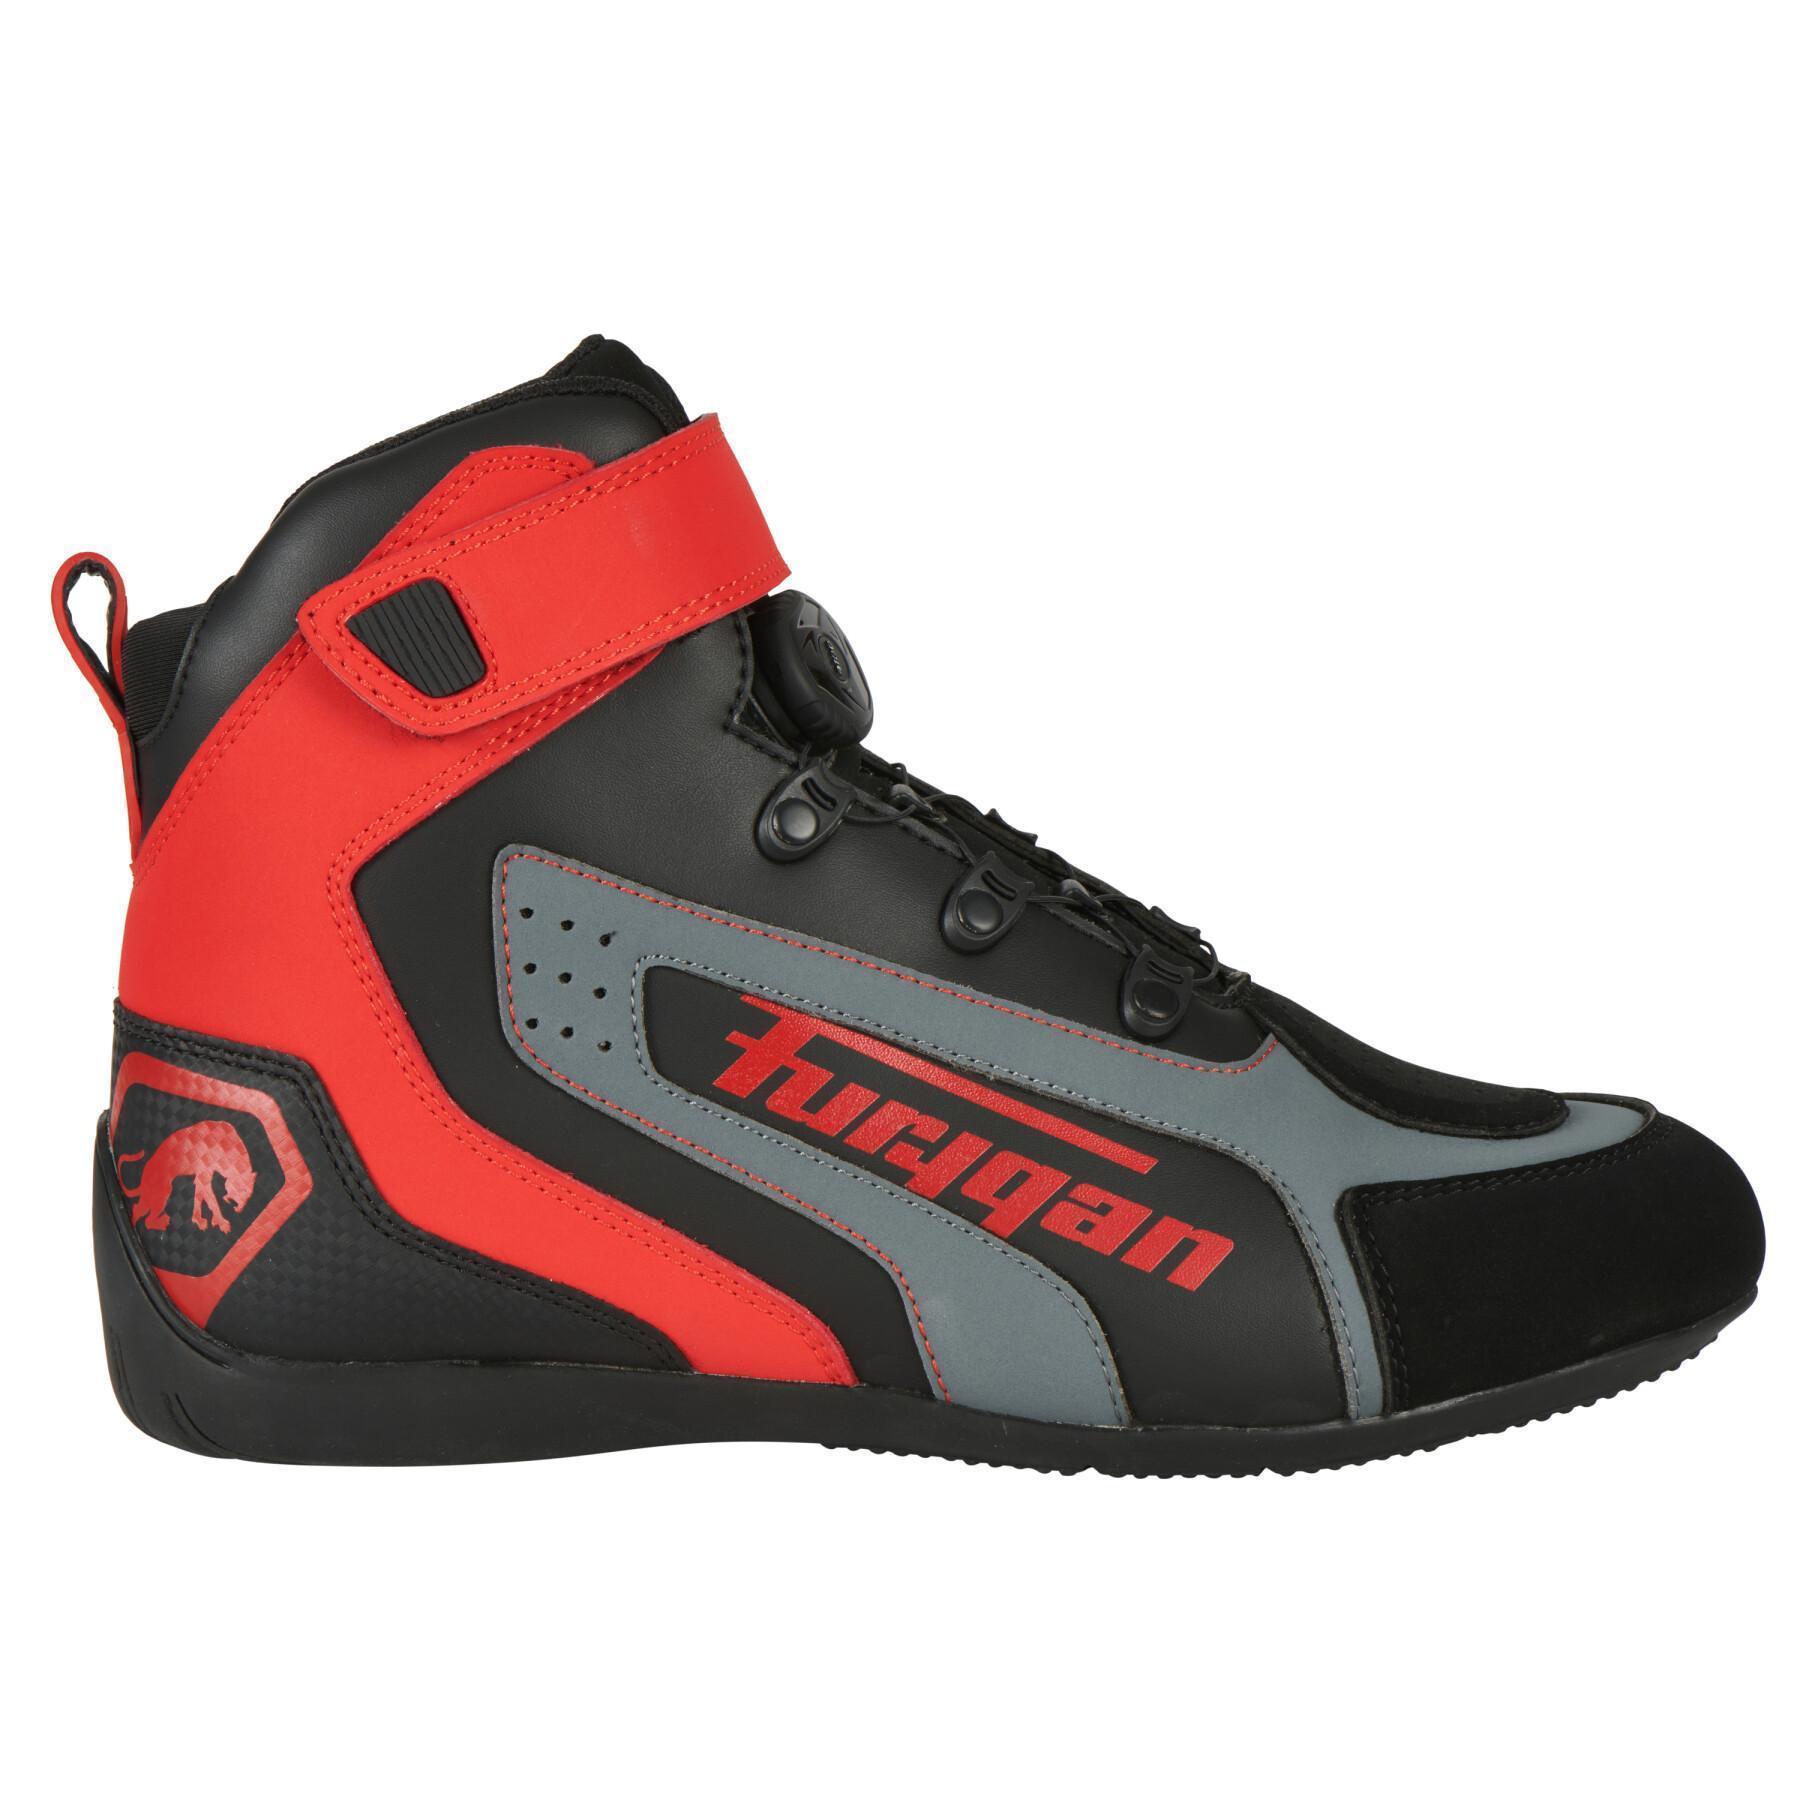 Chaussures moto Furygan Easy D3O - Chaussures homme - Bottes et chaussures  - Equipement du motard